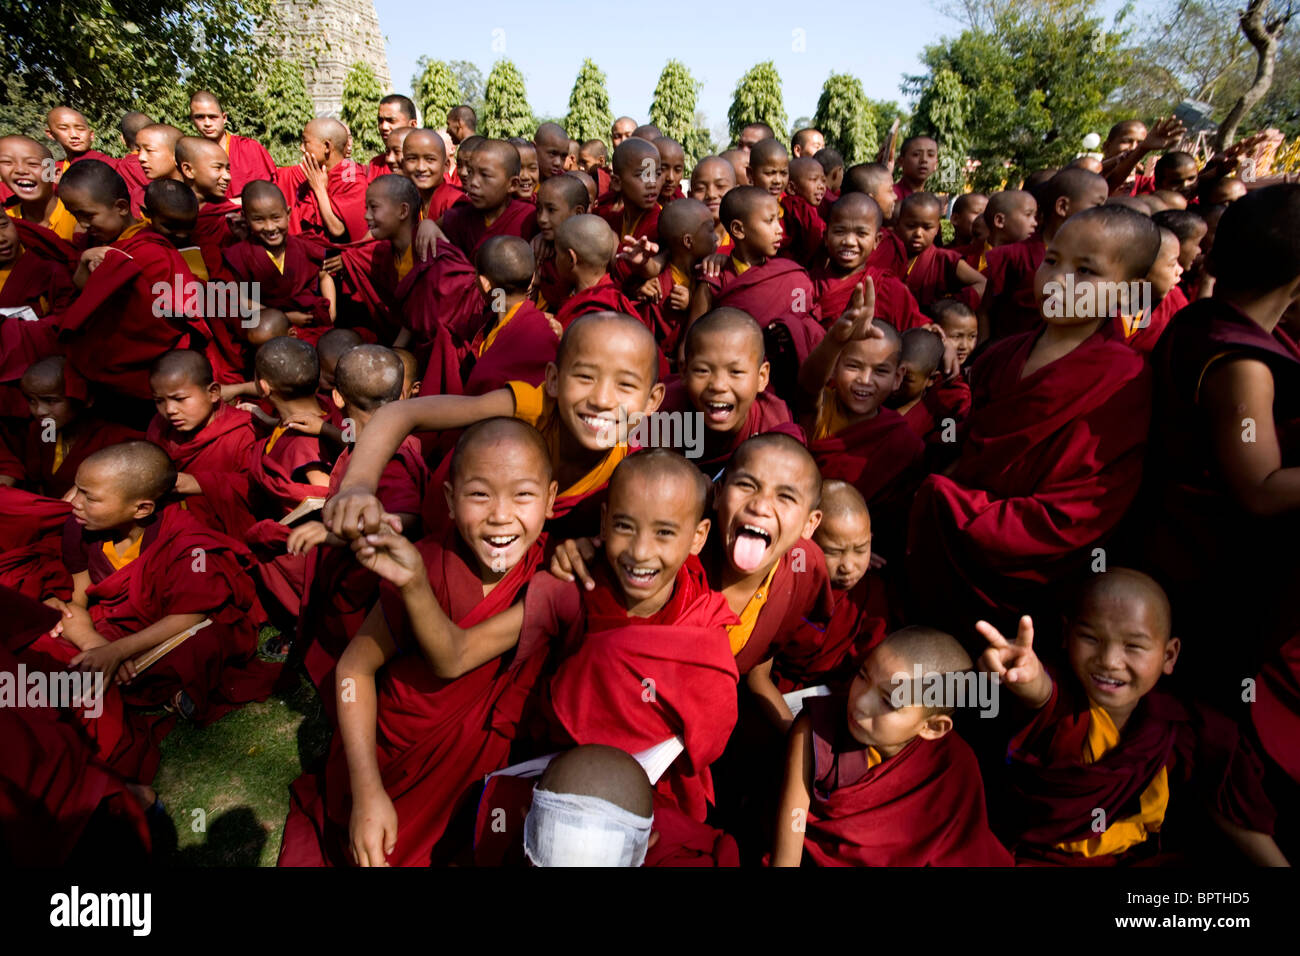 Grupo de jóvenes monjes tibetanos visitando el Templo Mahabodhi, Bodhgaya, Bihar, India. Foto de stock